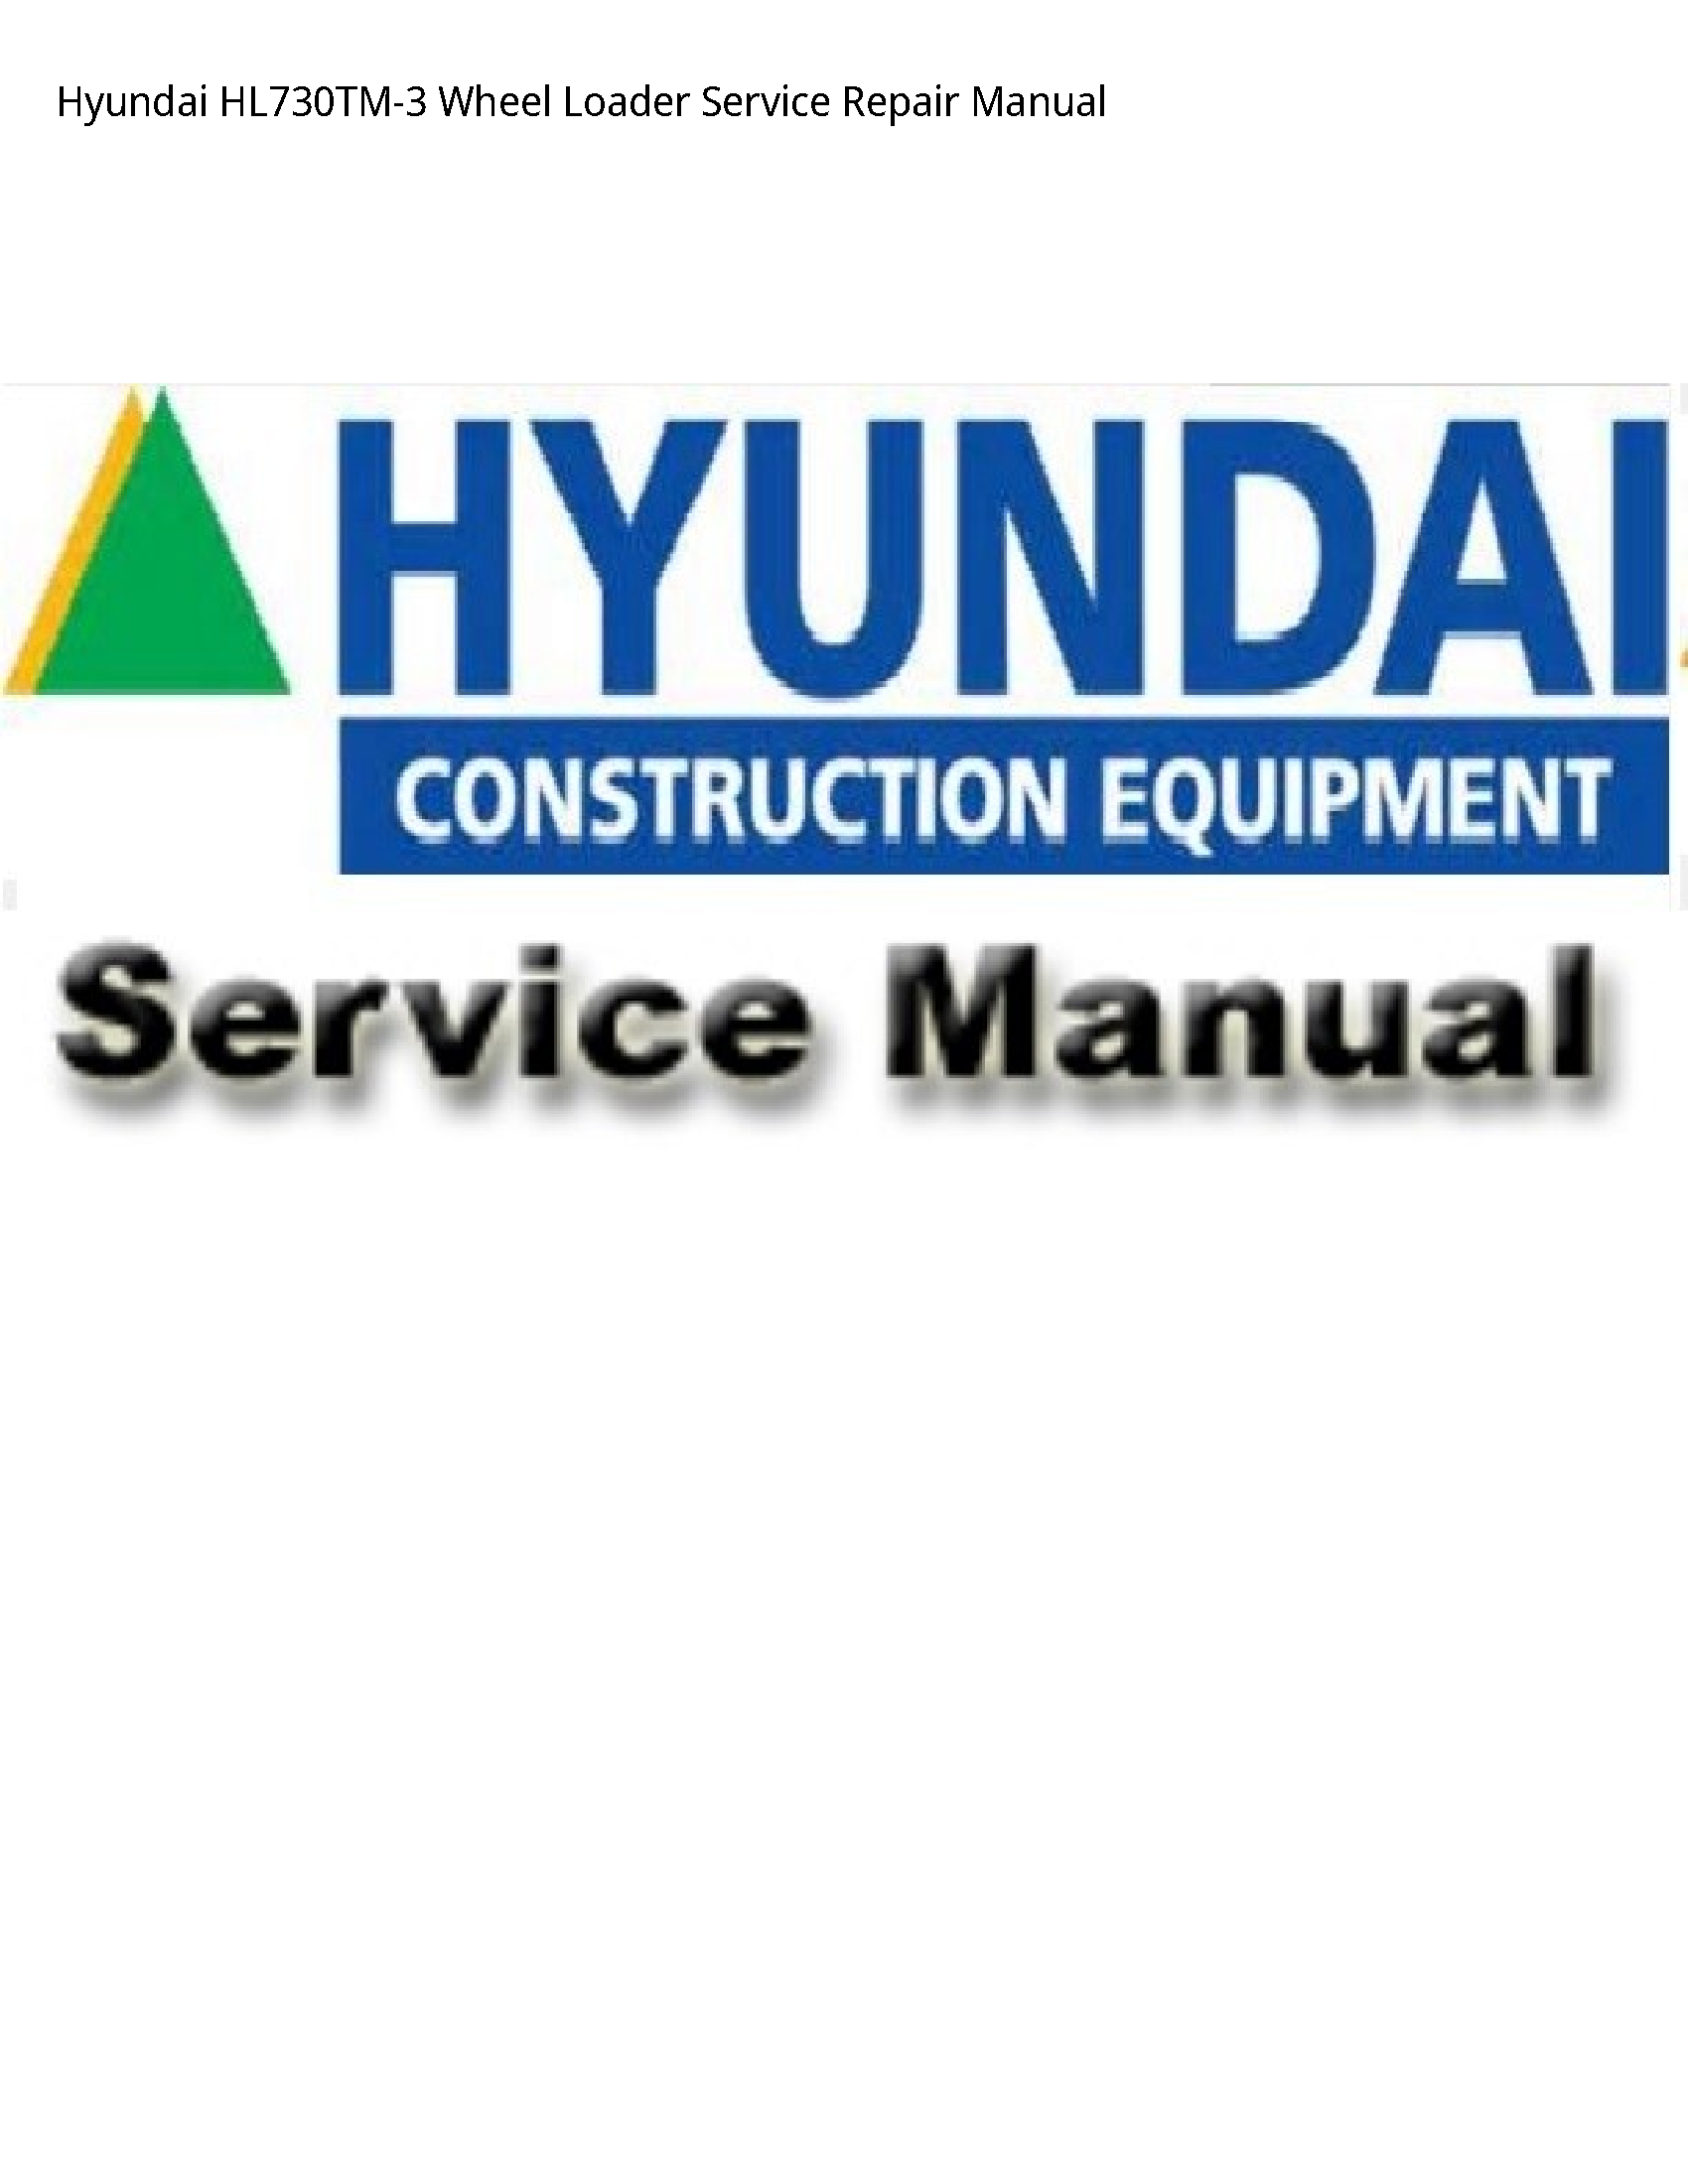 Hyundai HL730TM-3 Wheel Loader manual